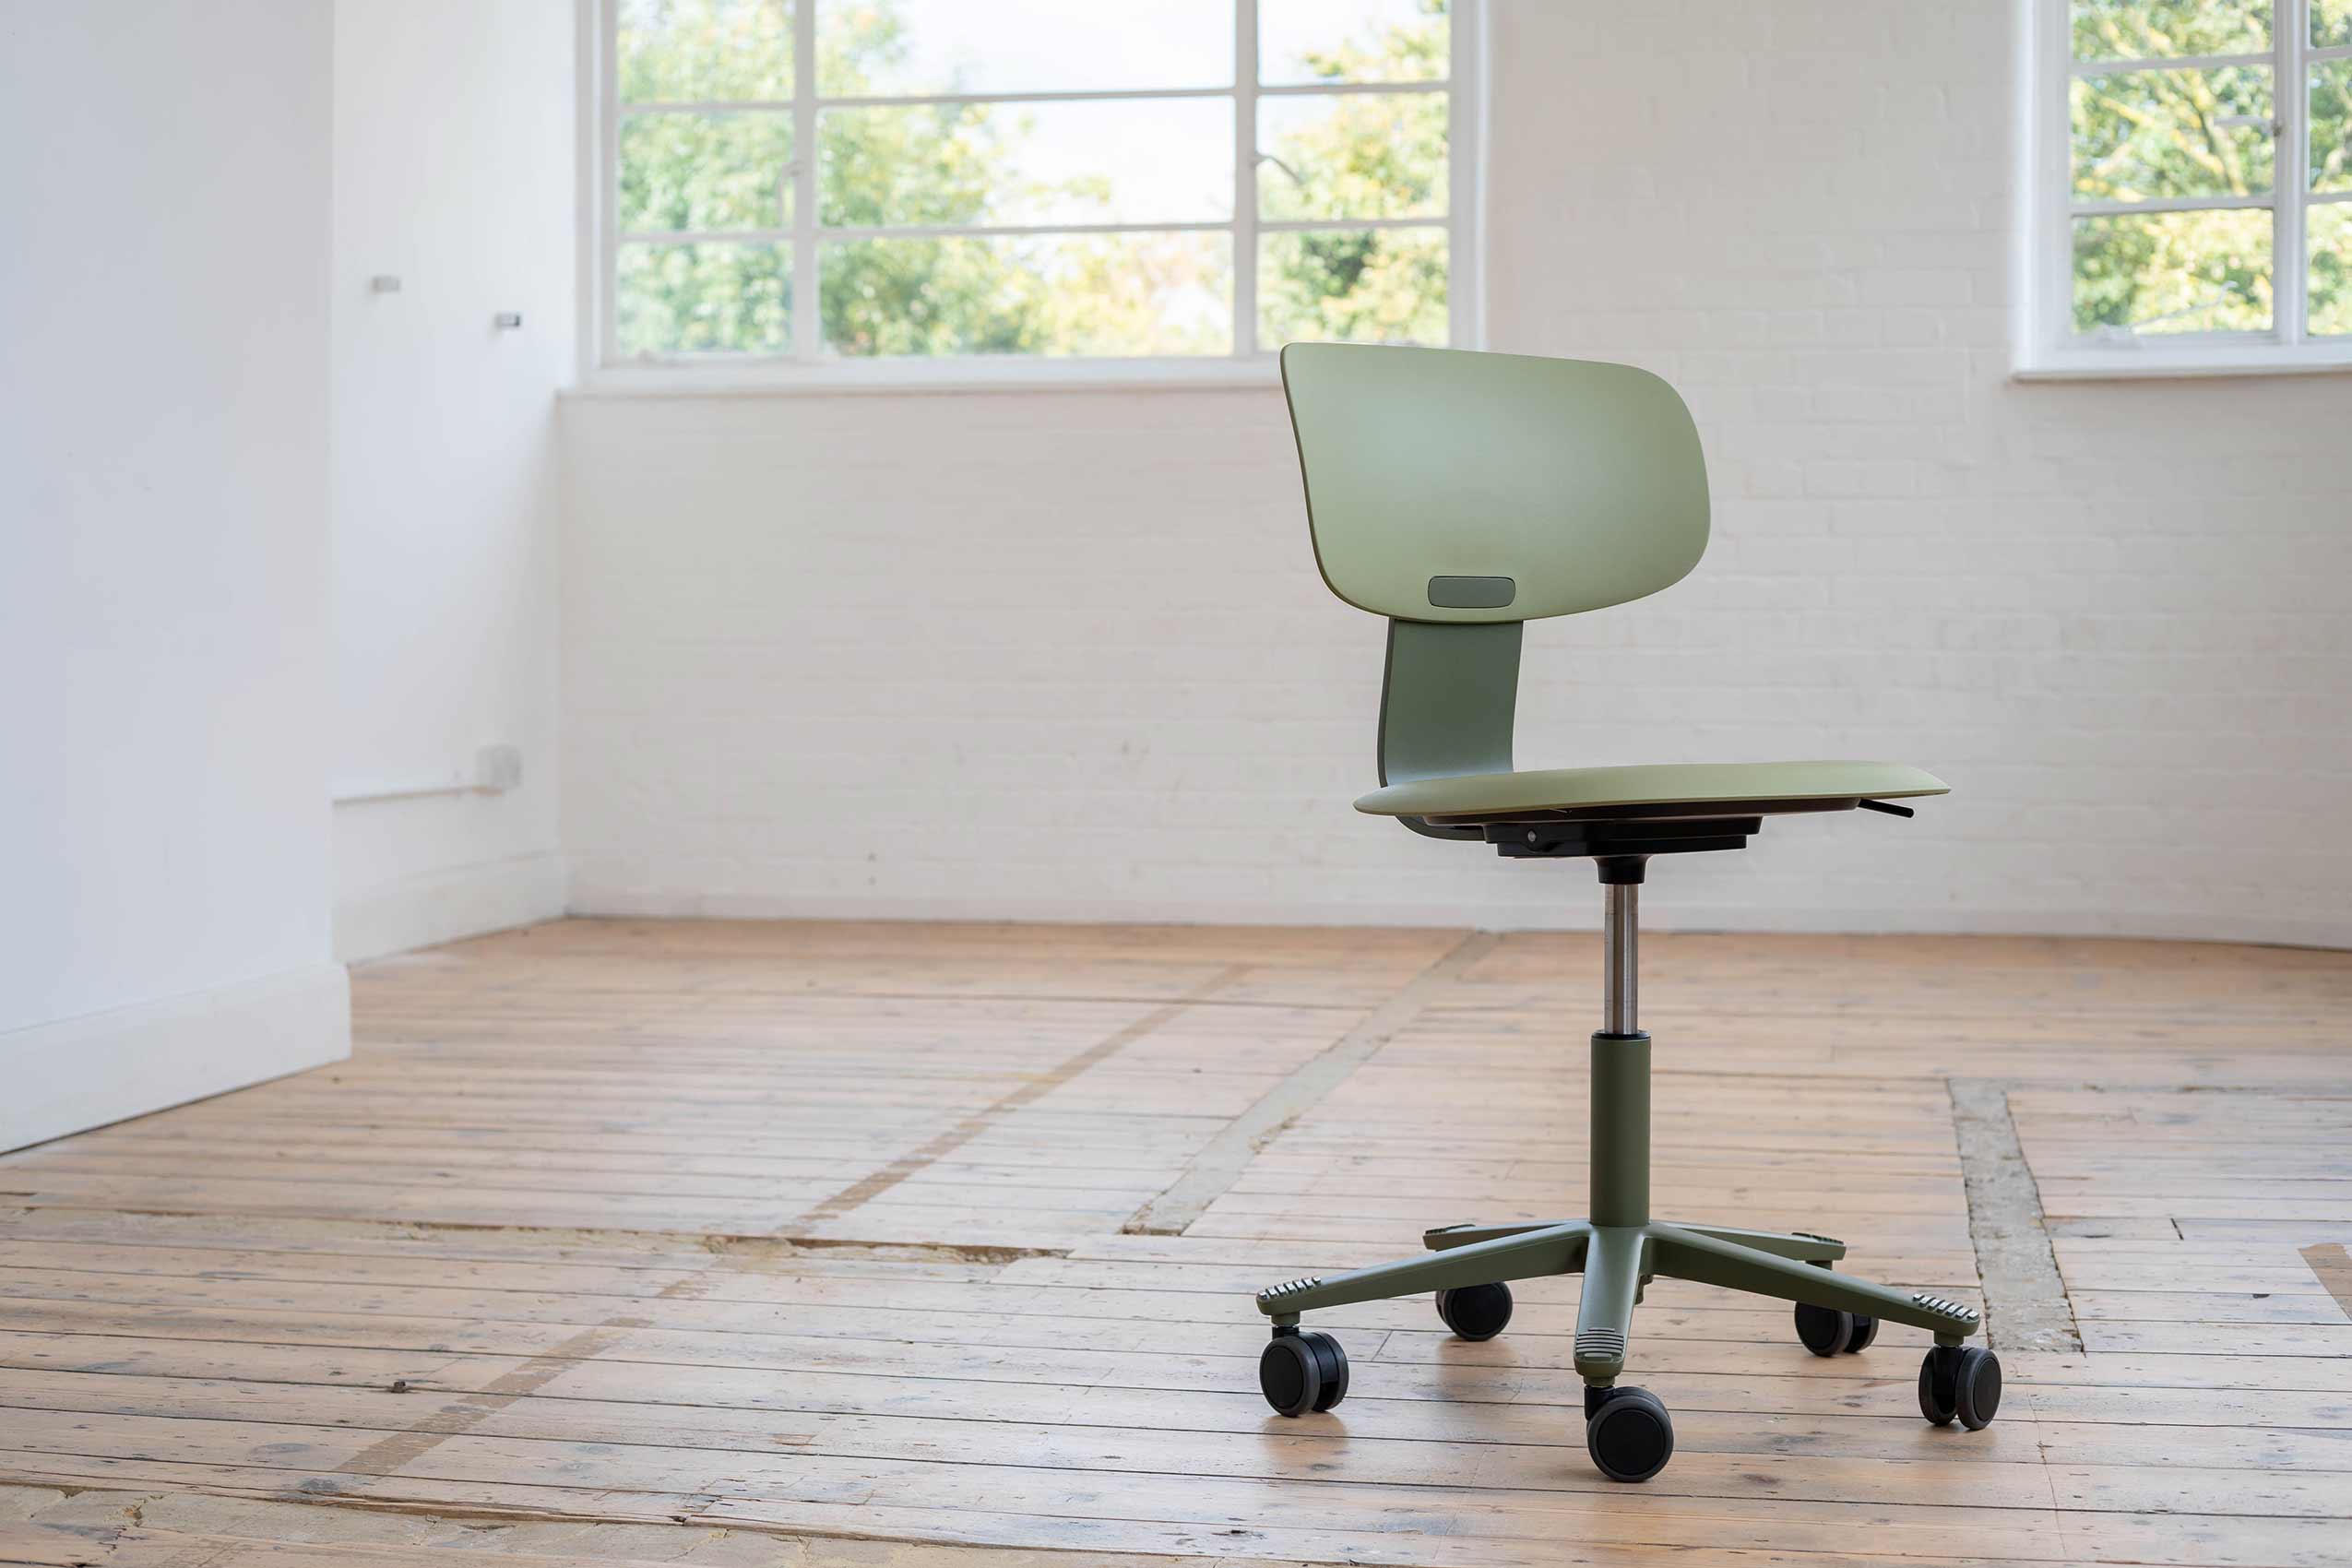 HÅG | Tion - één stoel om overal te kunnen werken